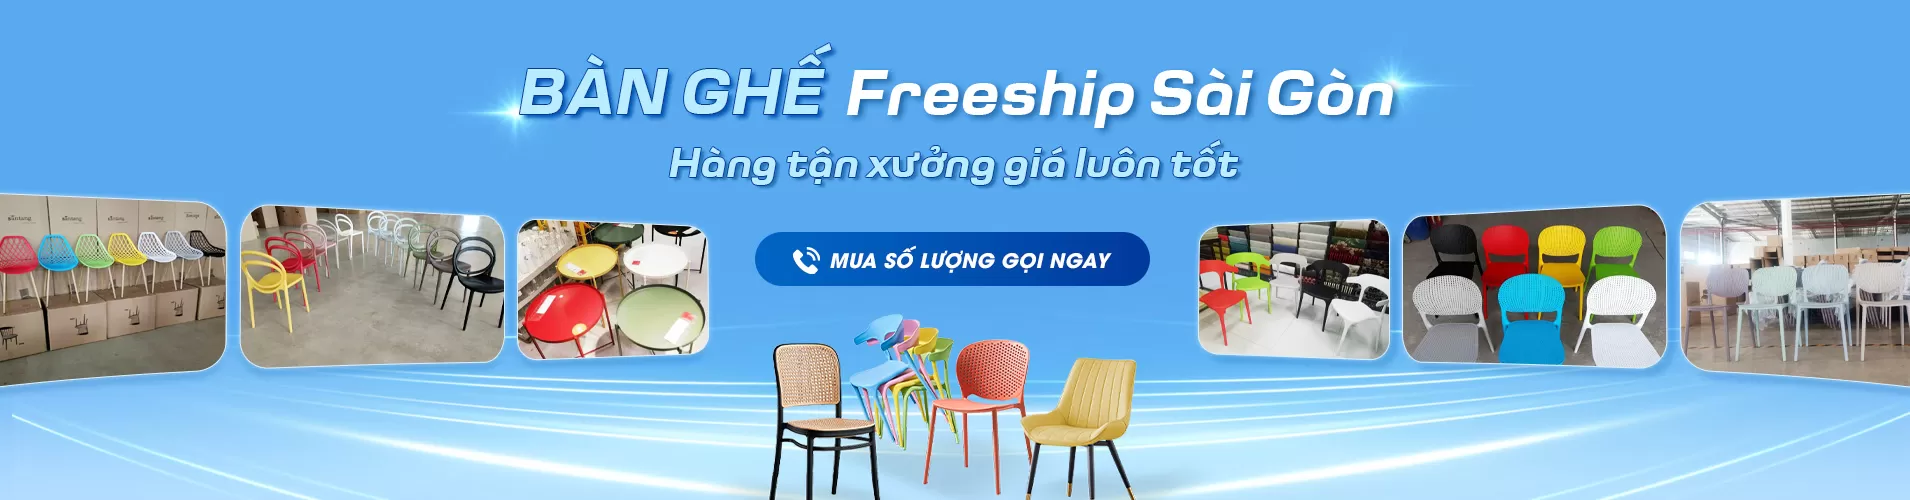 Banner bàn ghế freeship Sài Gòn